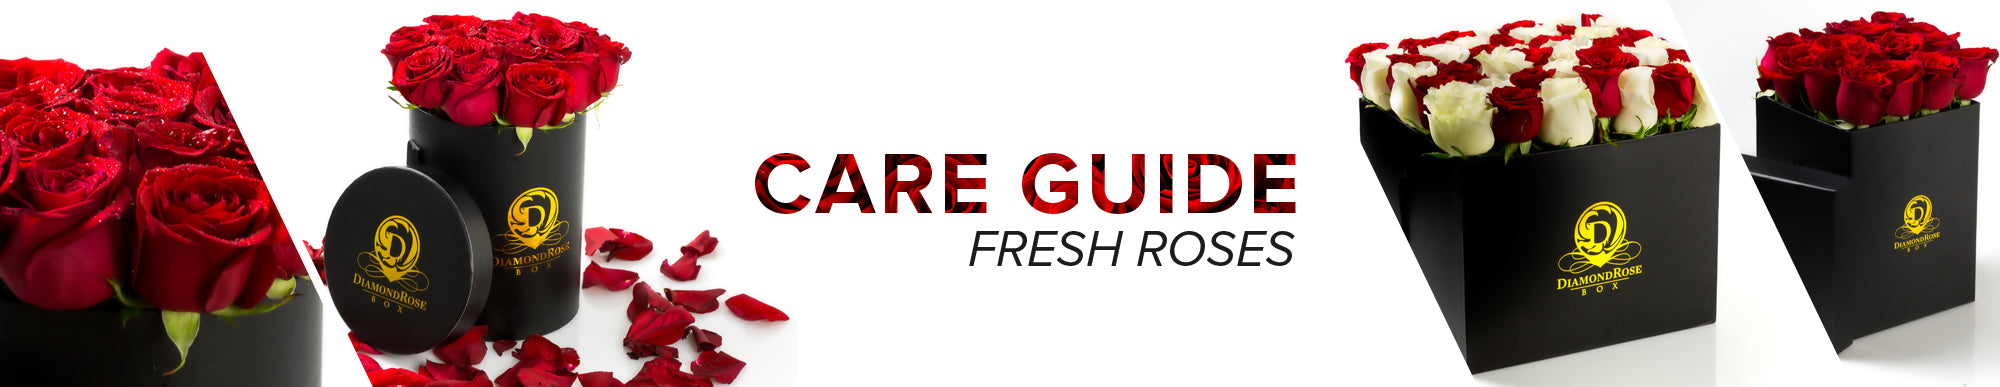 Care Guide Fresh Roses